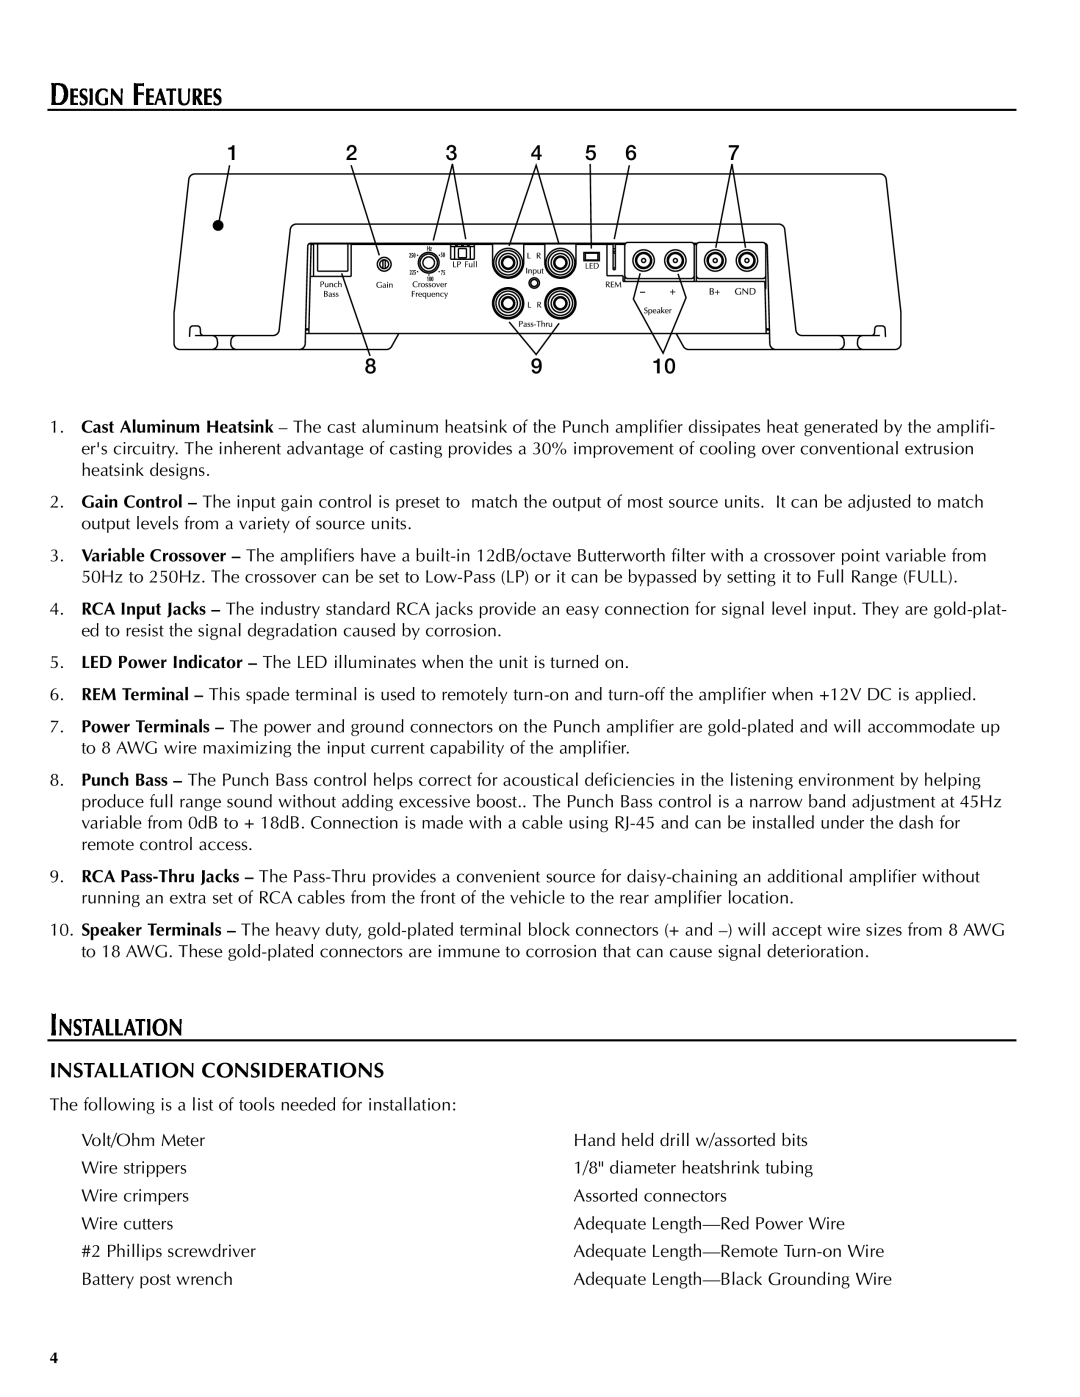 Rockford Fosgate X150.1 manual Design Features, Installation Considerations 